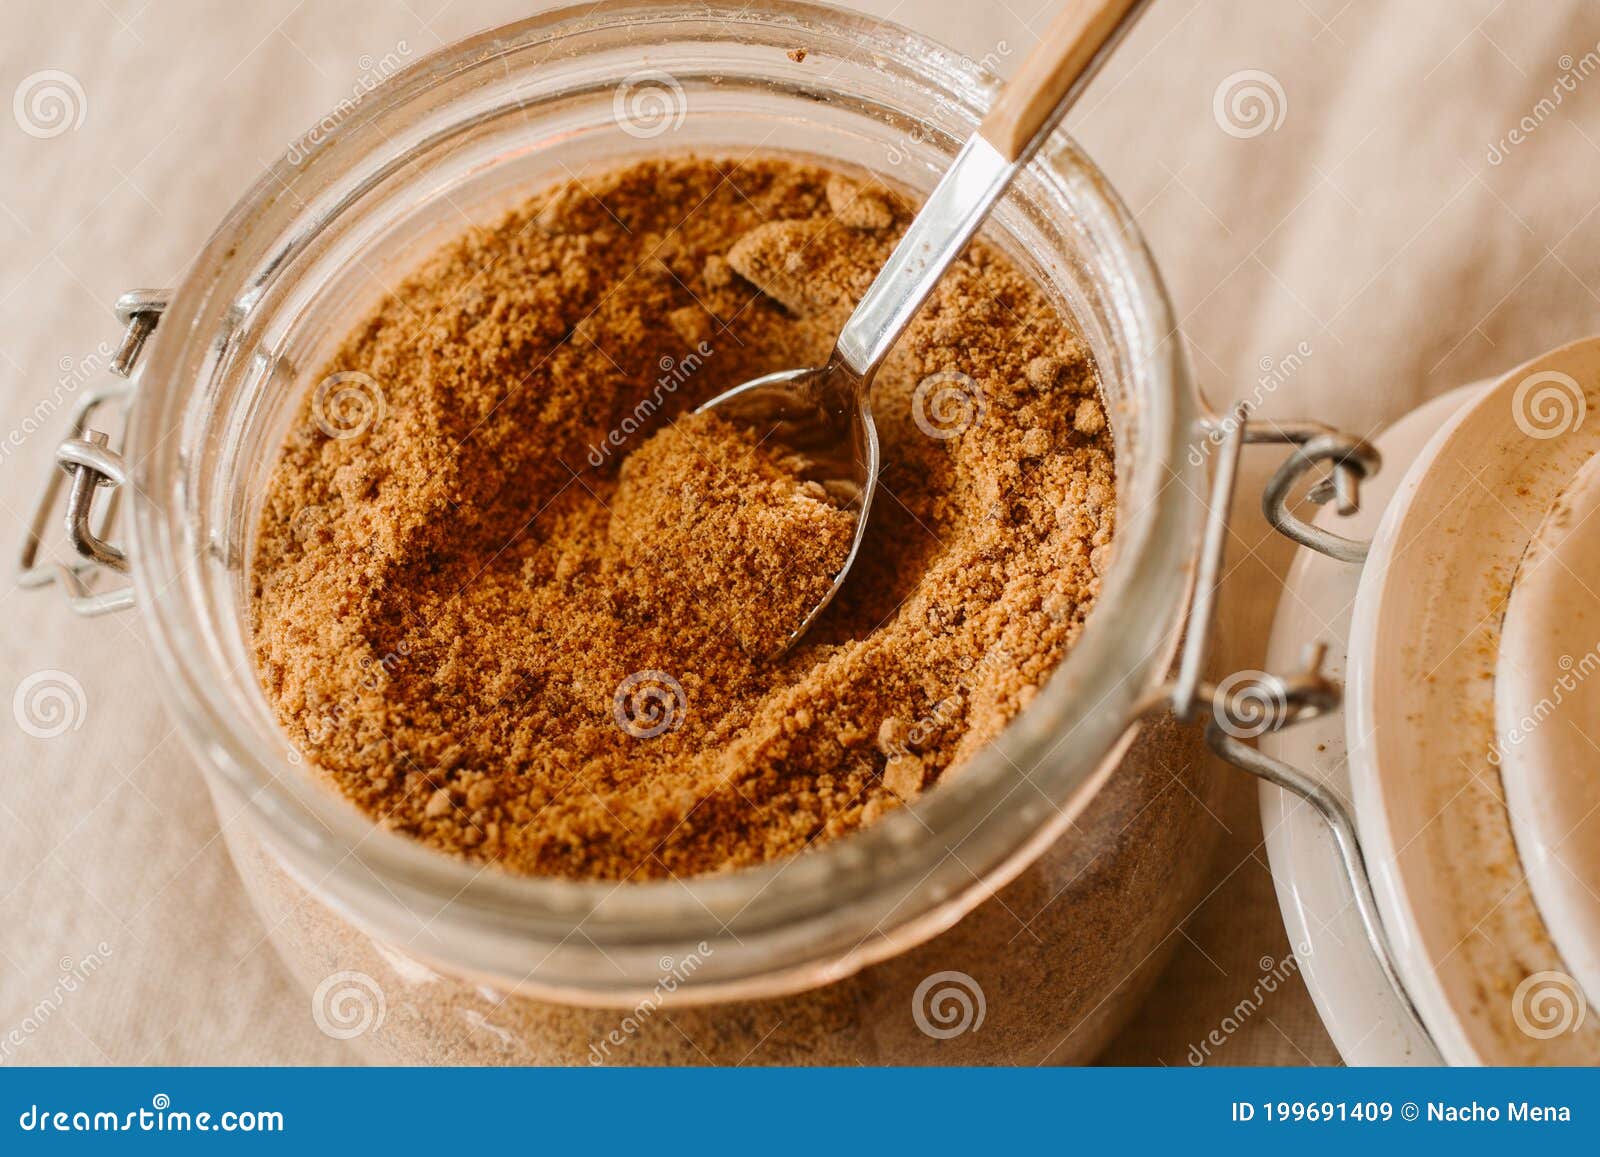 panela sugar background. close up view of raw cane sugar in a jar.